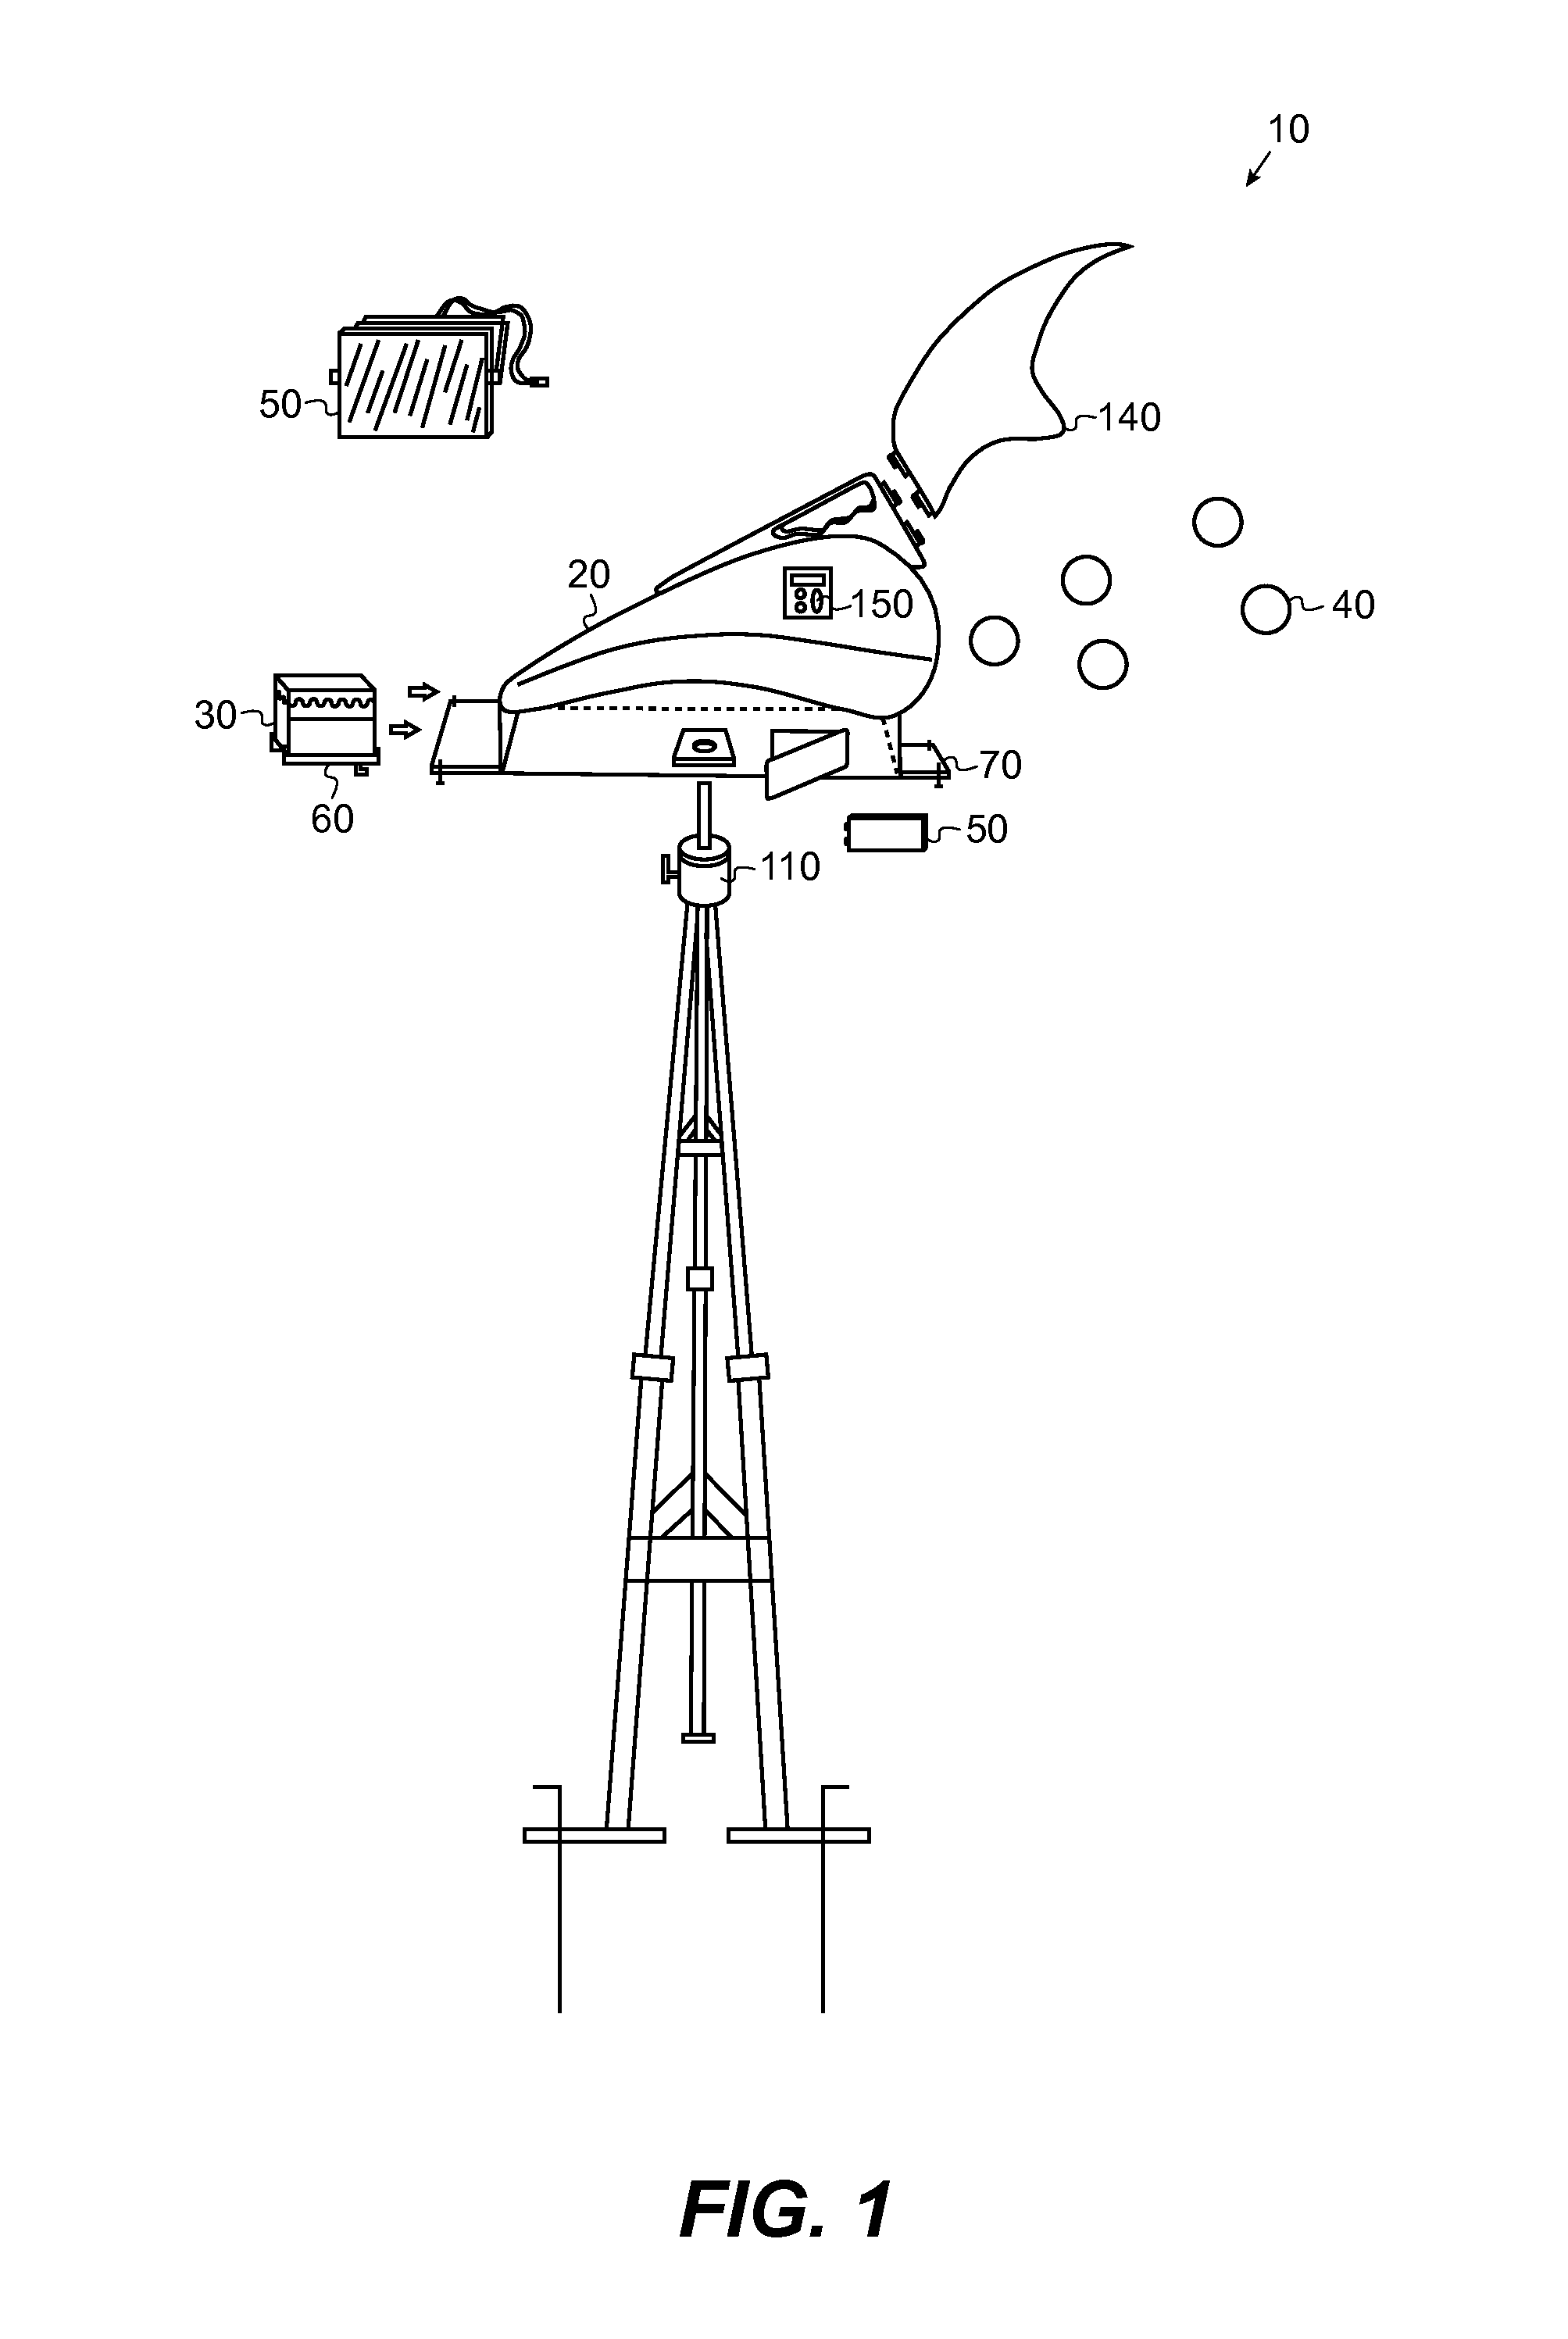 Airborne scent dispensing apparatus and system